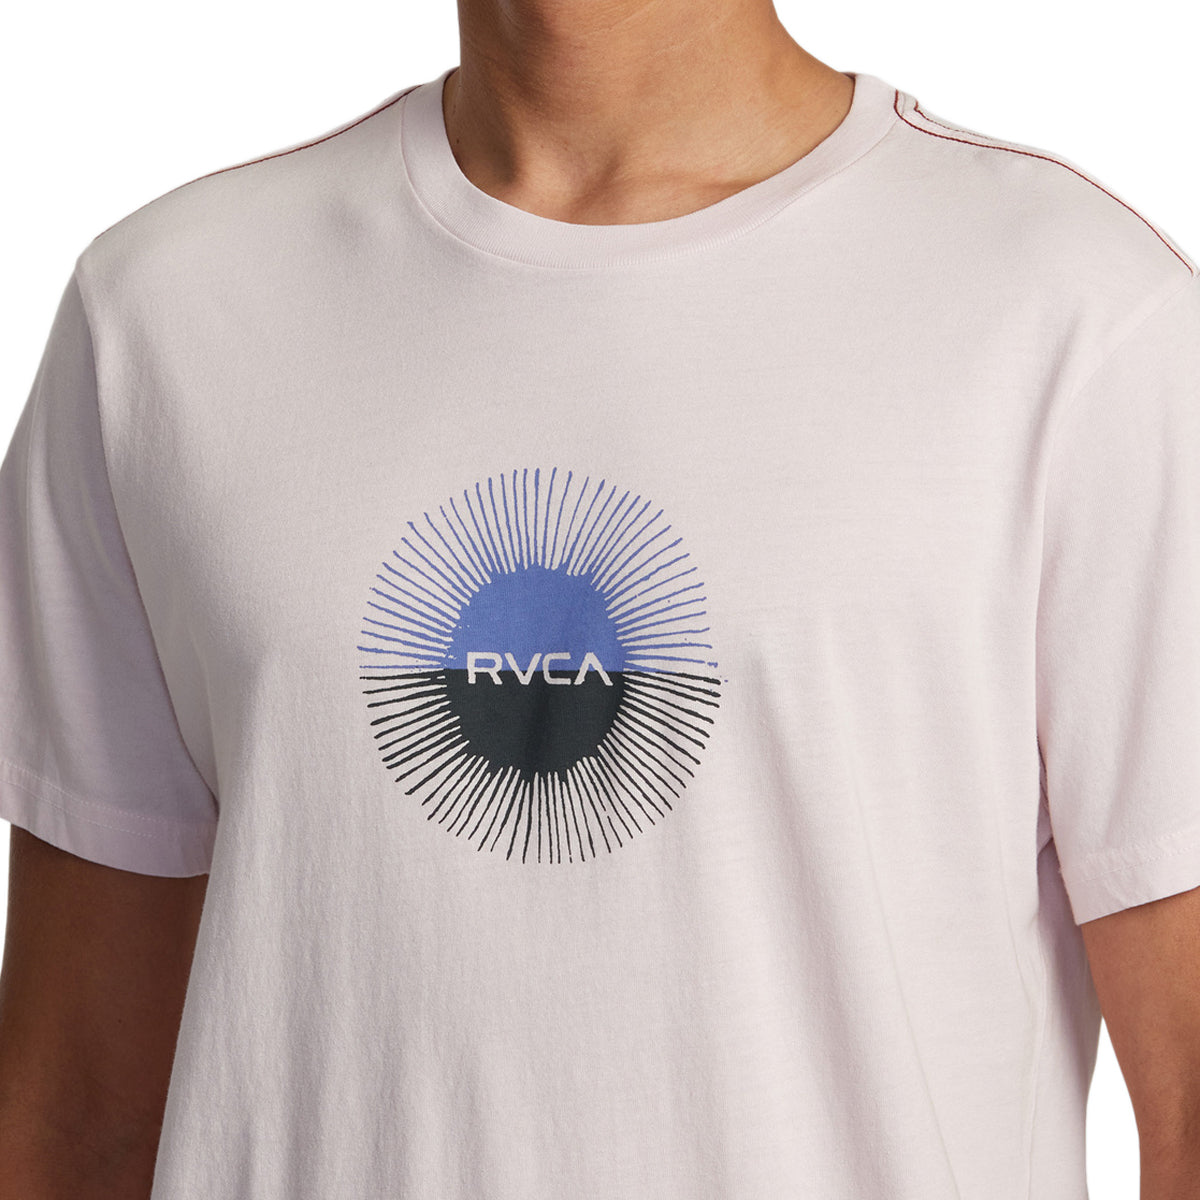 RVCA Solar Eclipse T-Shirt - Light Pink image 3